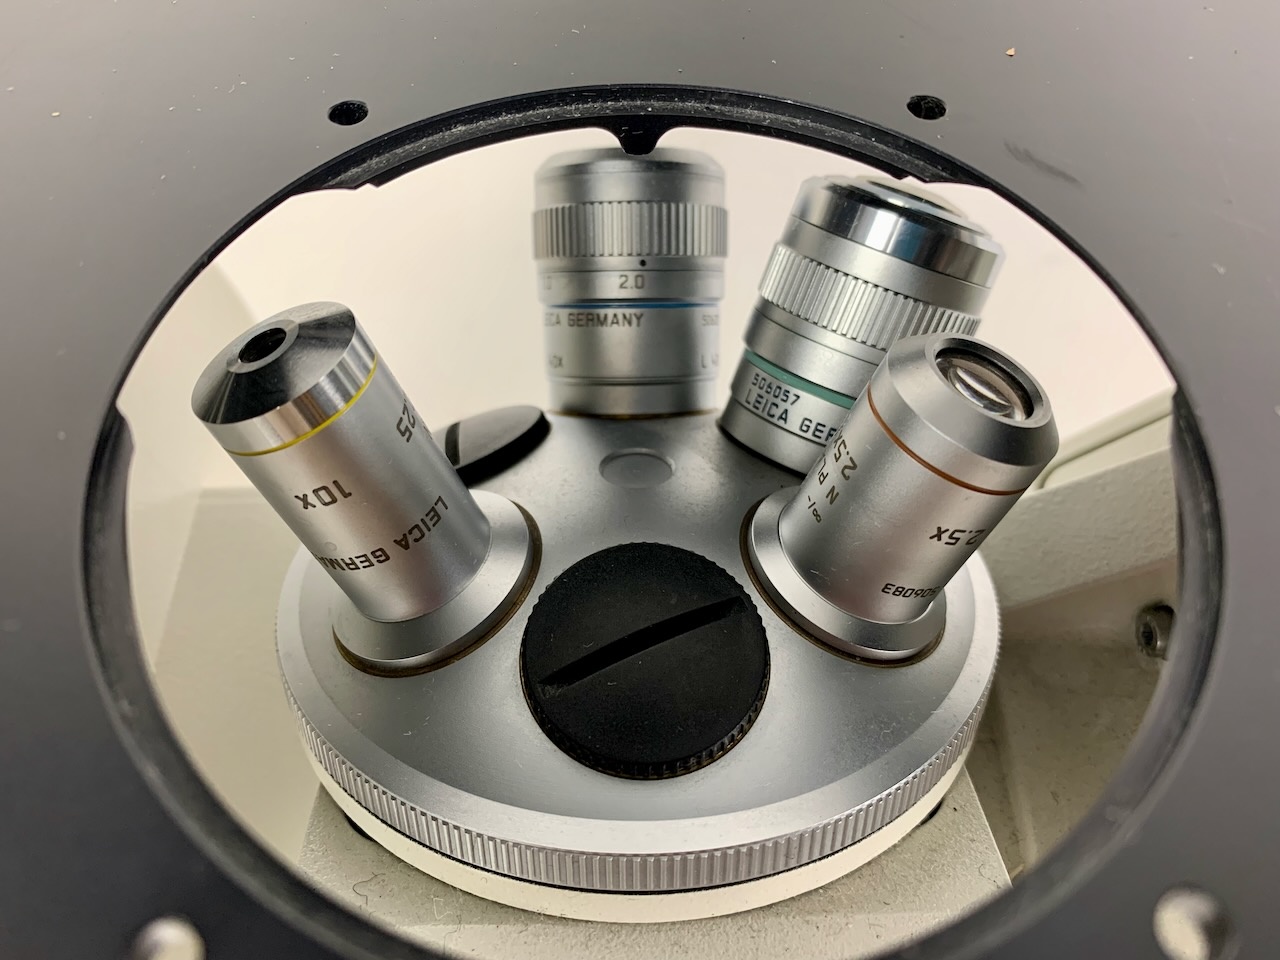 Leica DM IRB Microscope